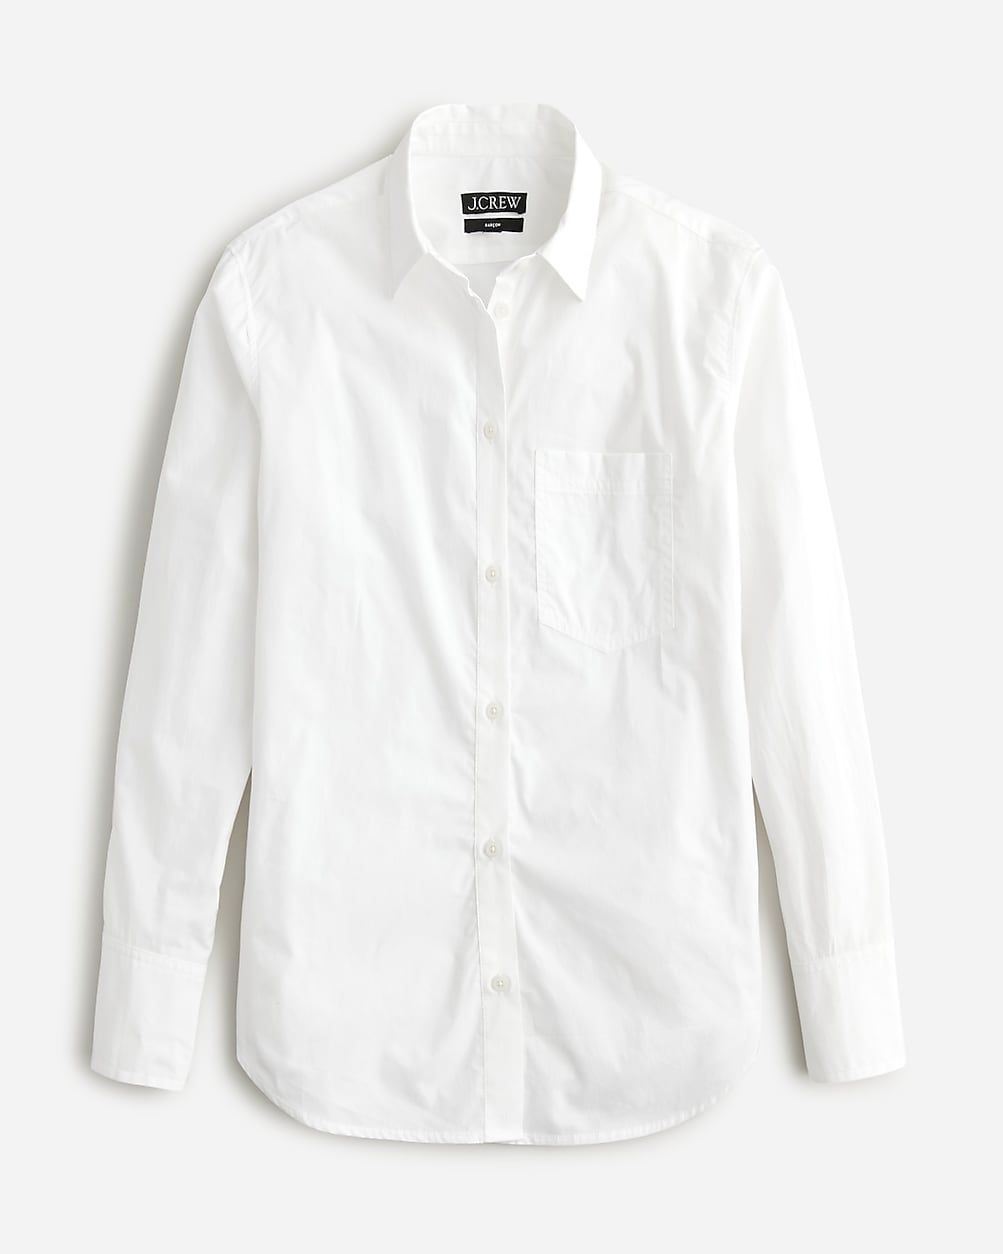 Garçon classic shirt in cotton poplin | J.Crew US